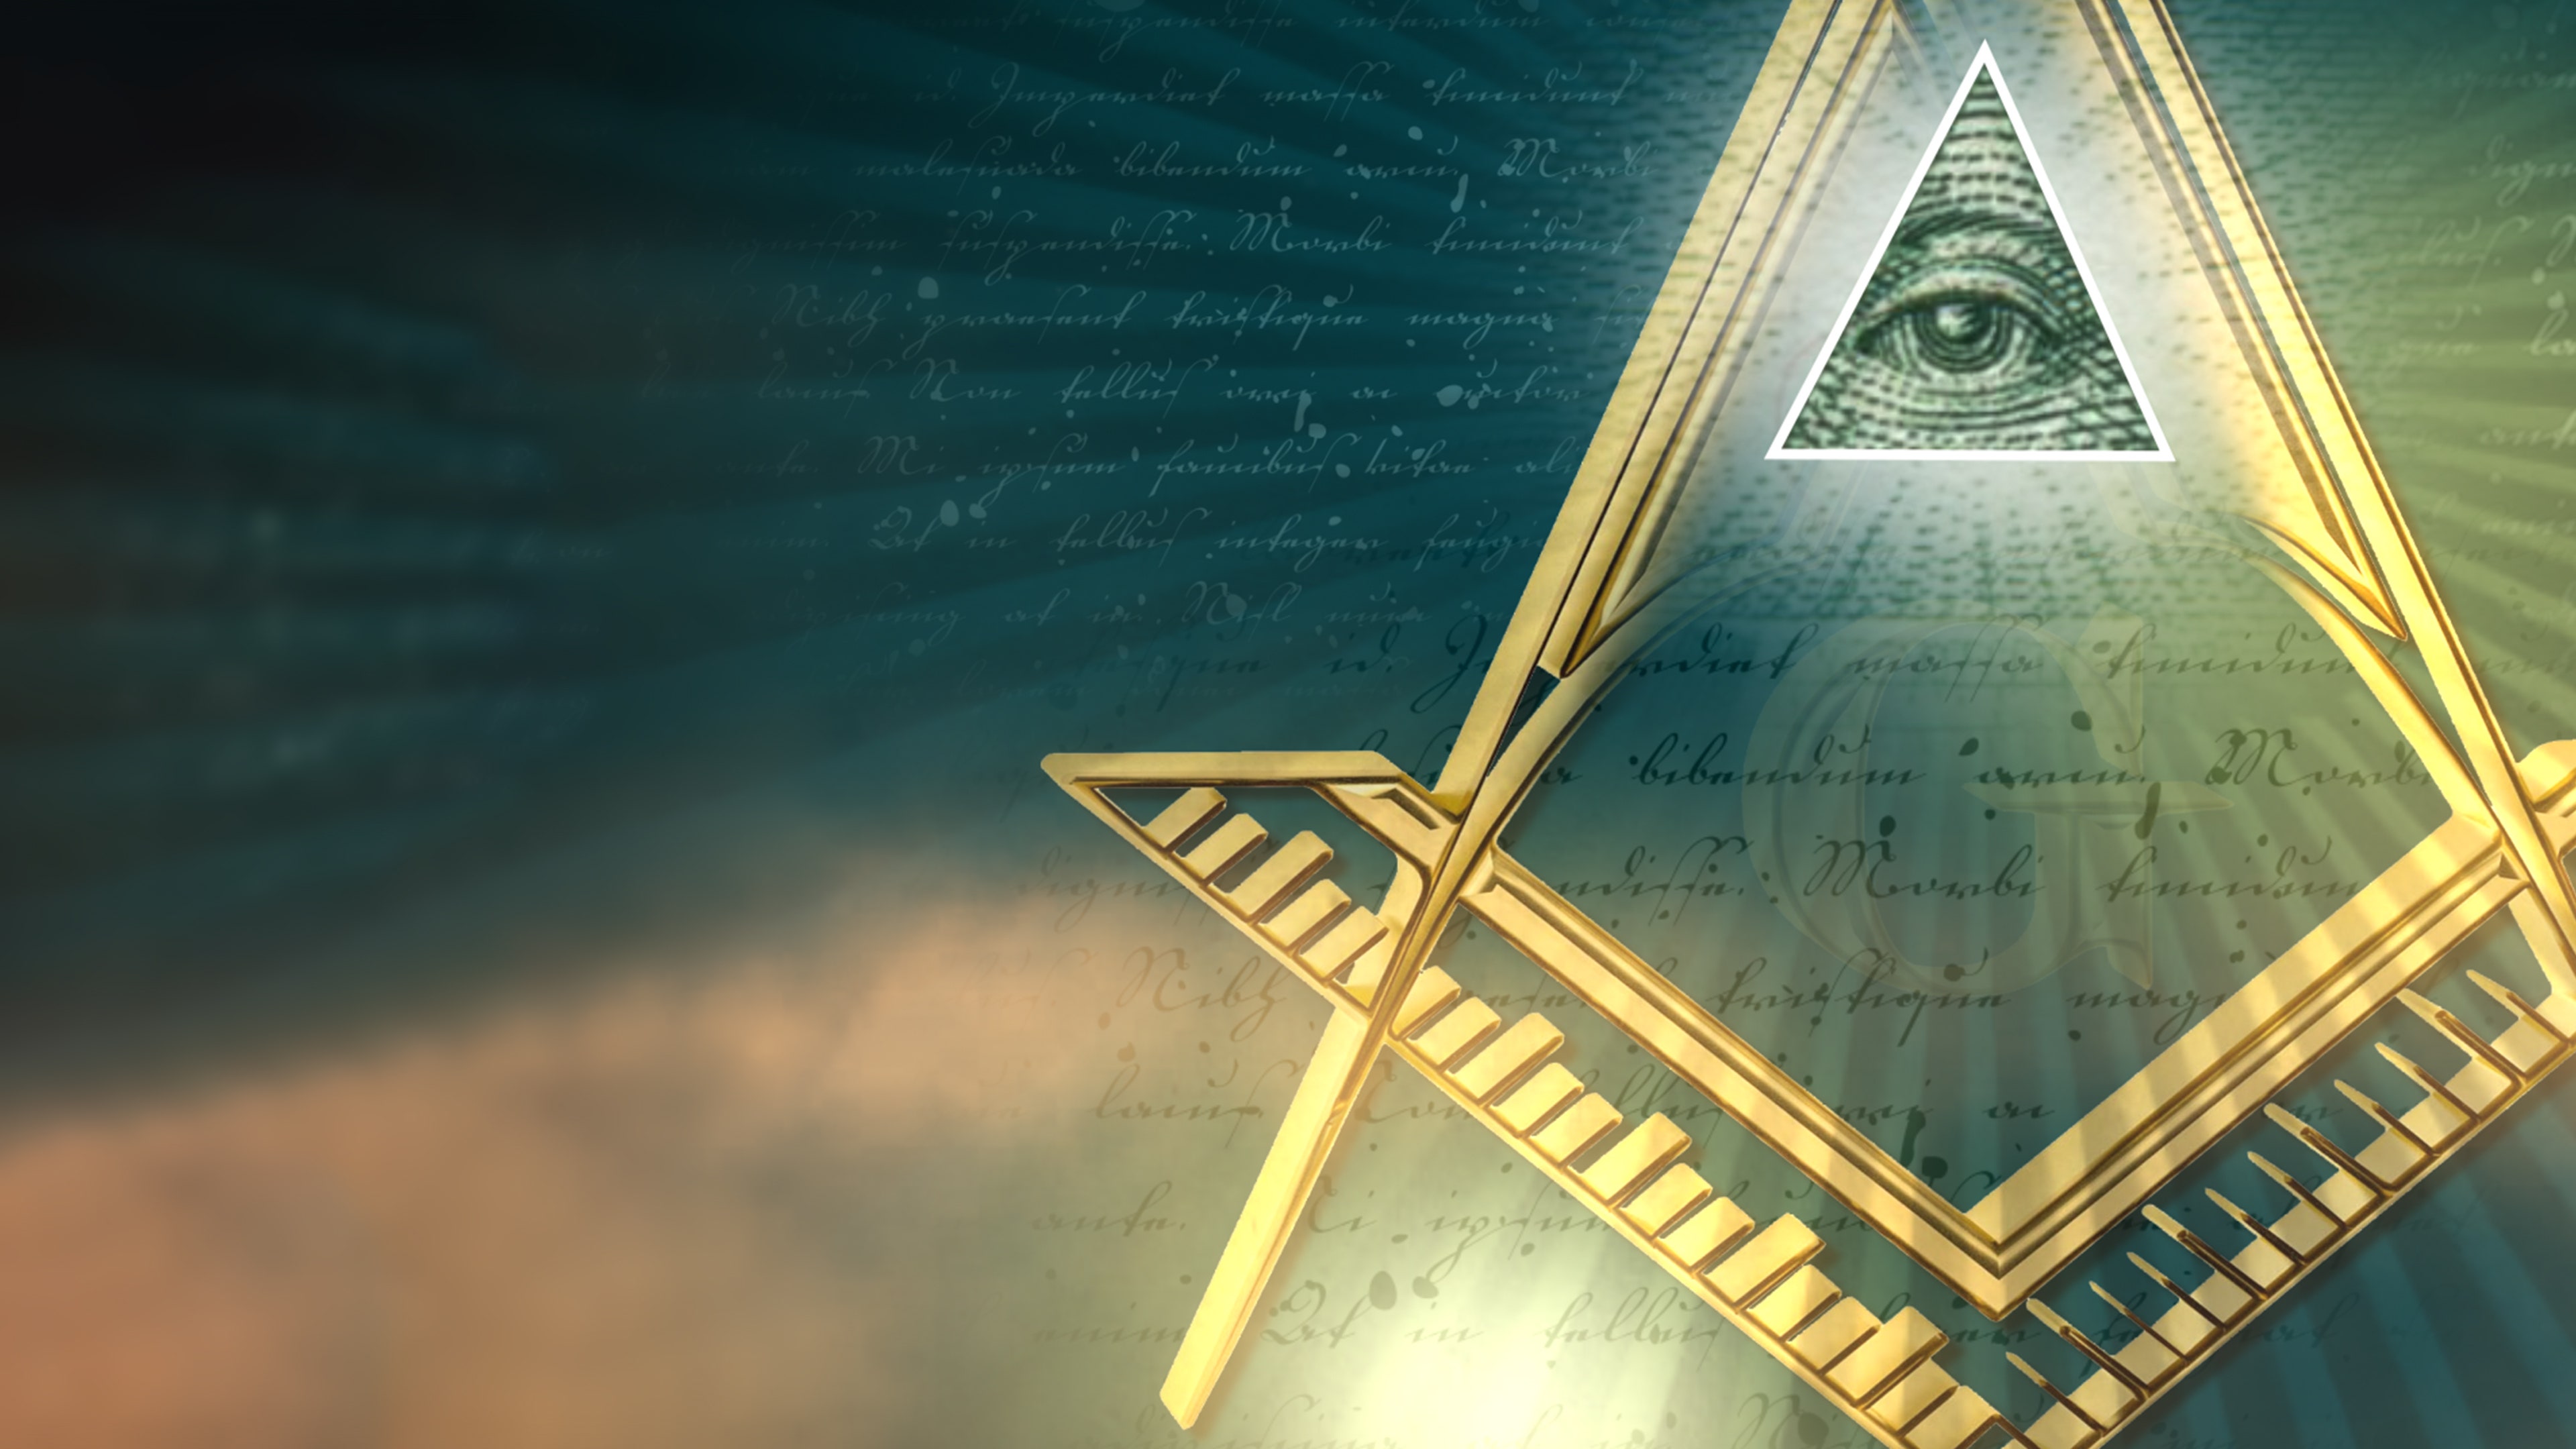 freemasons-a-society-of-secrets-nation-poster